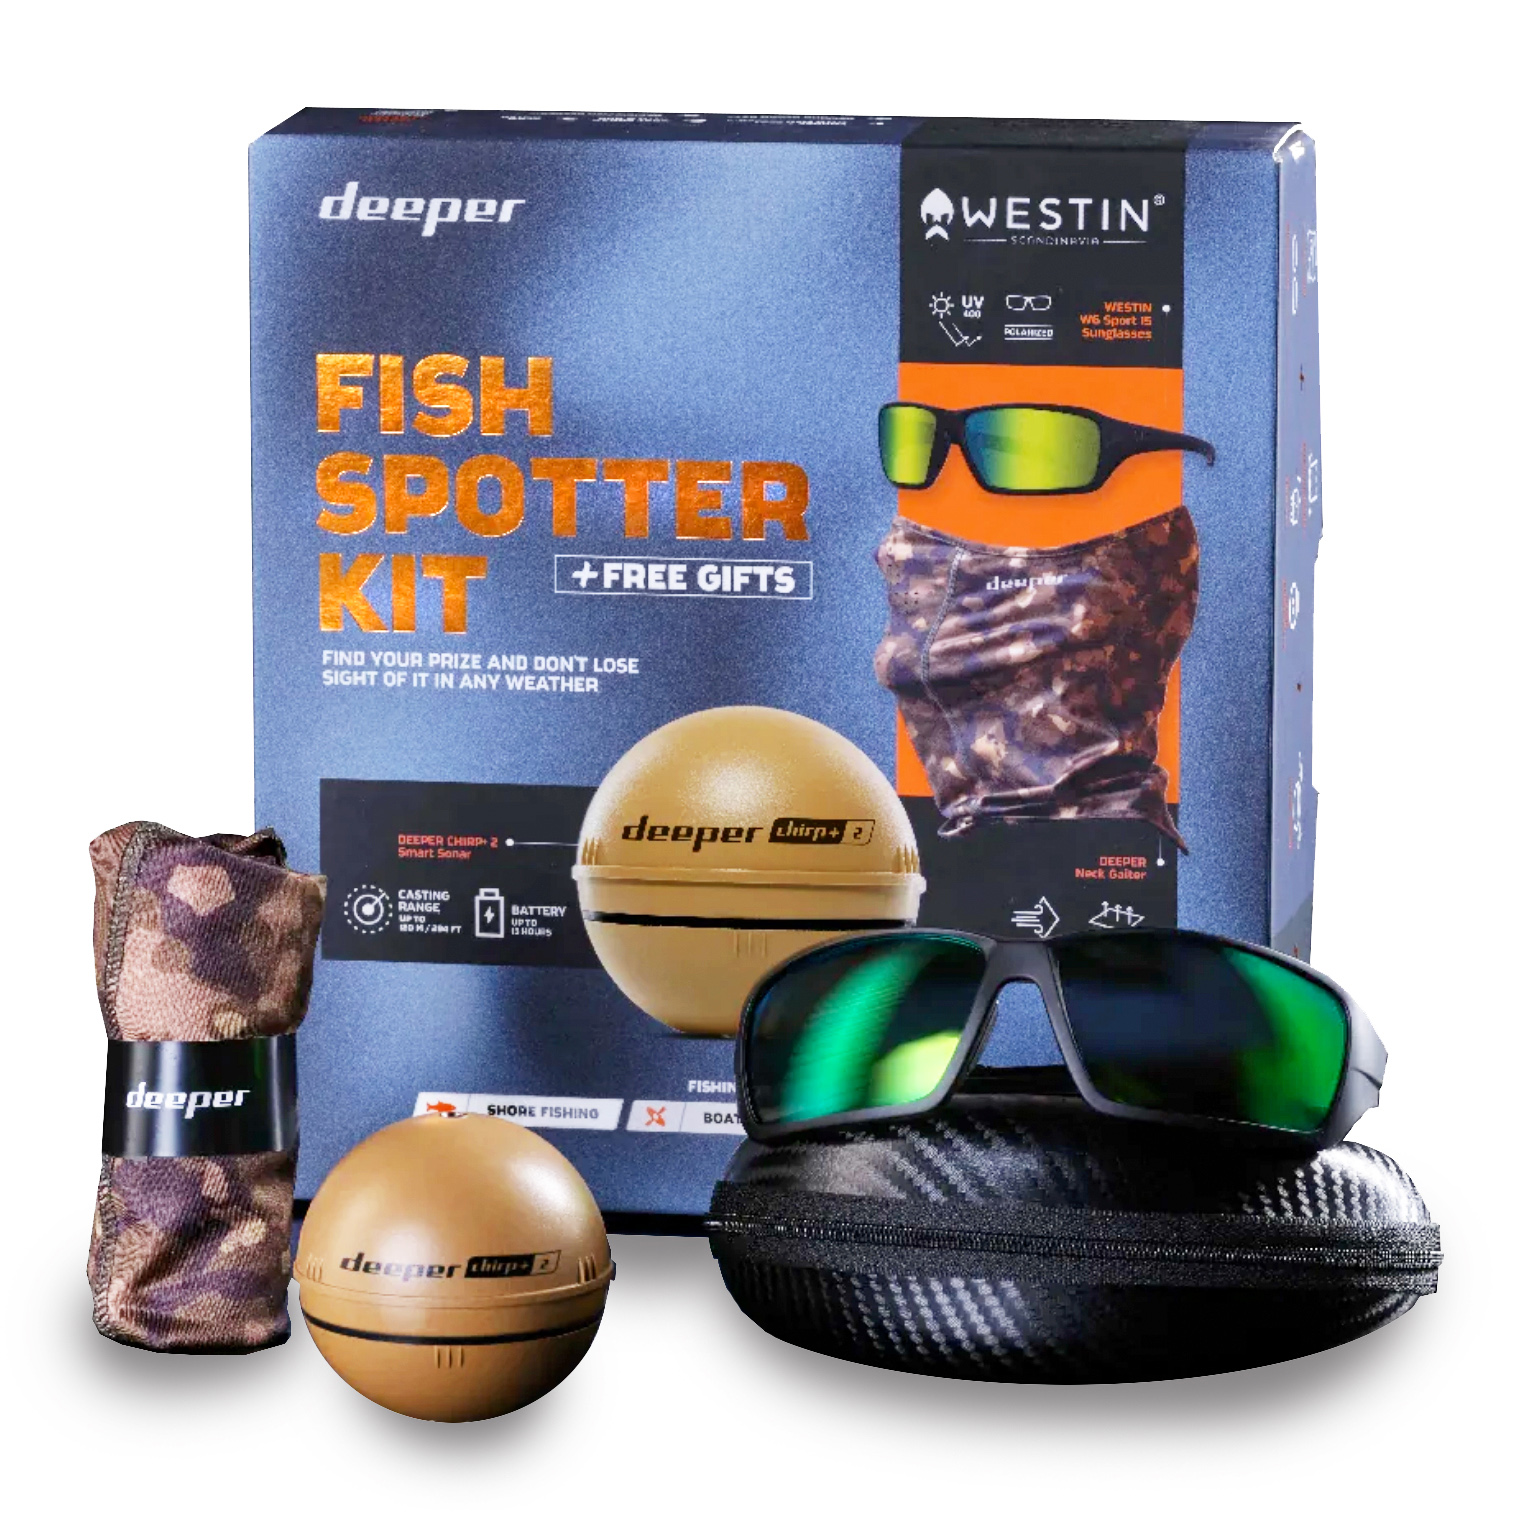 Deeper  Fish spotter kit